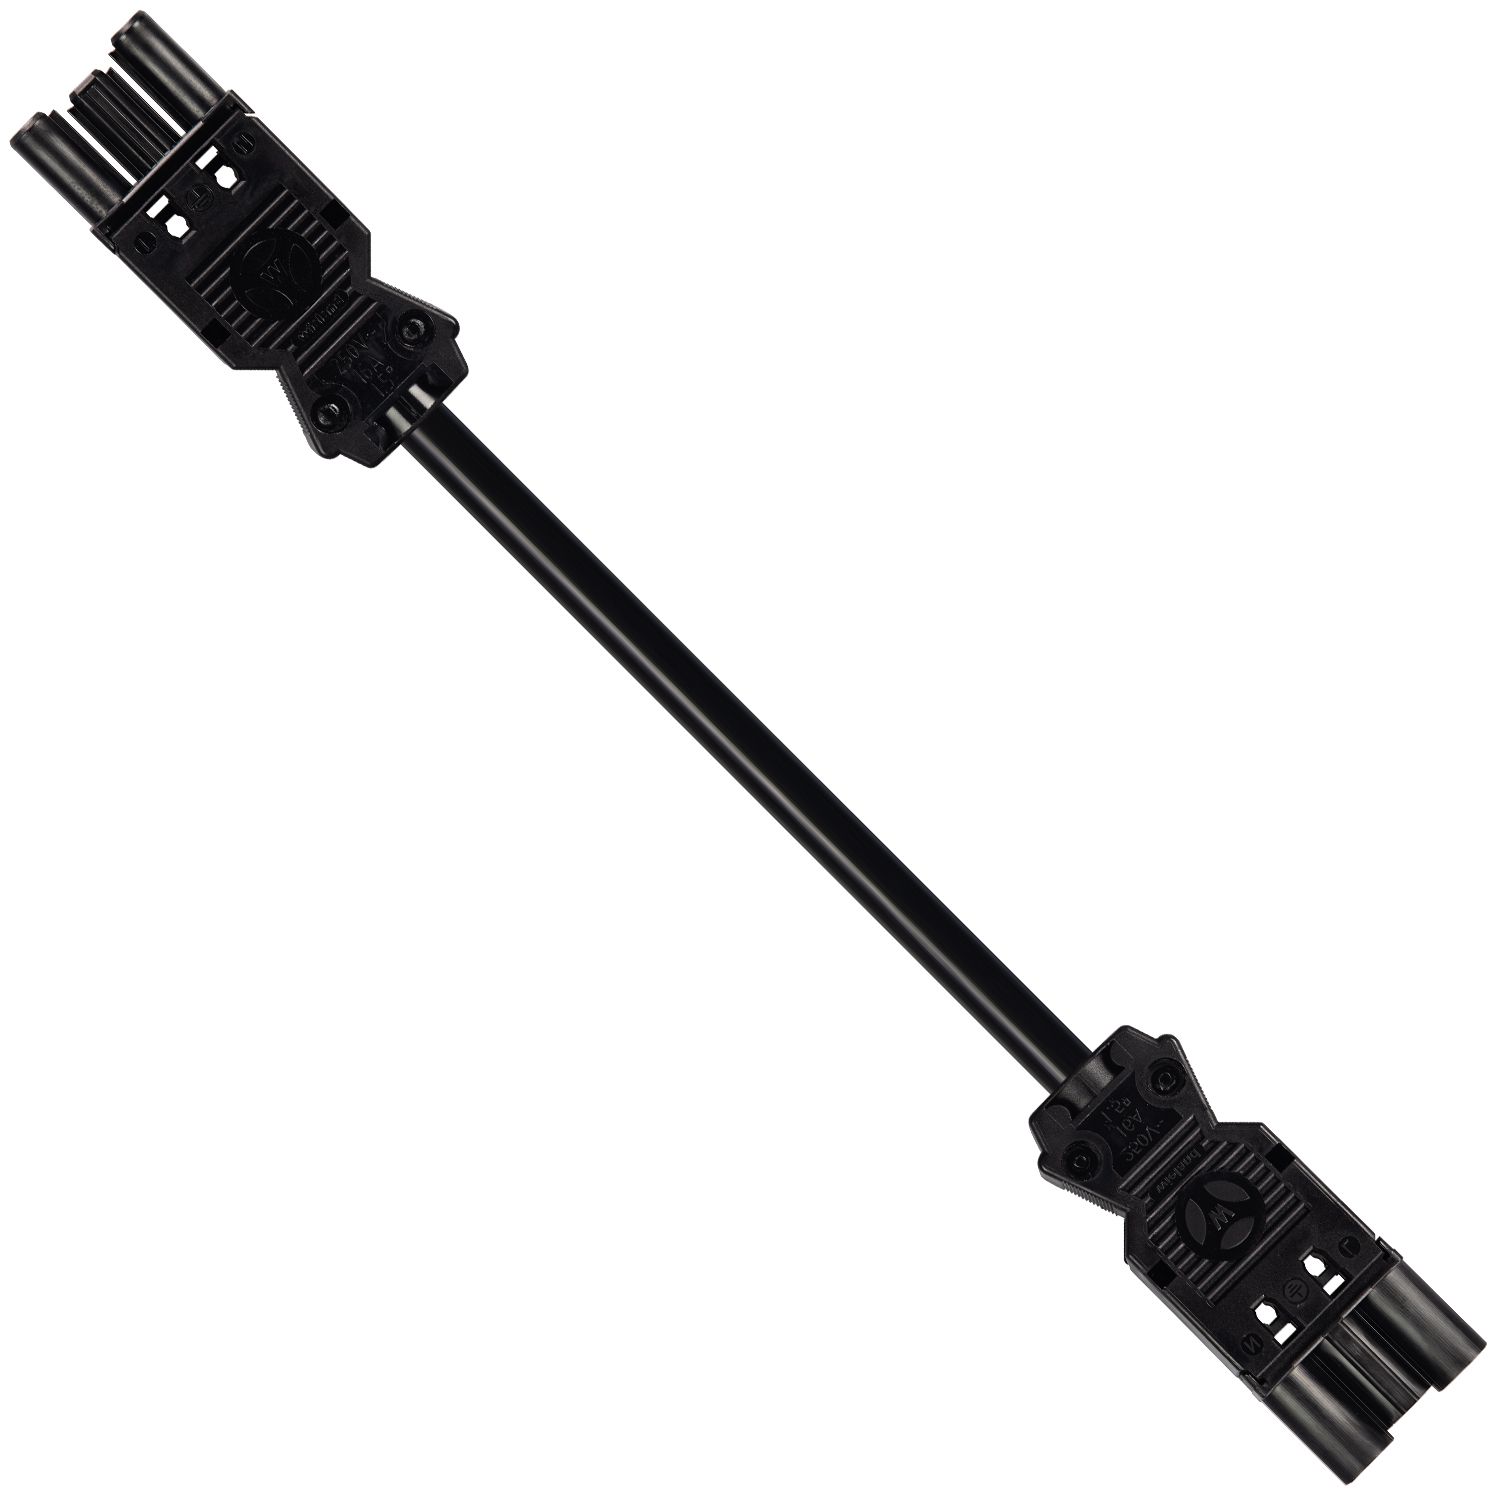 Kindermann extension socket / plug GST18 - 2.0 m cable length